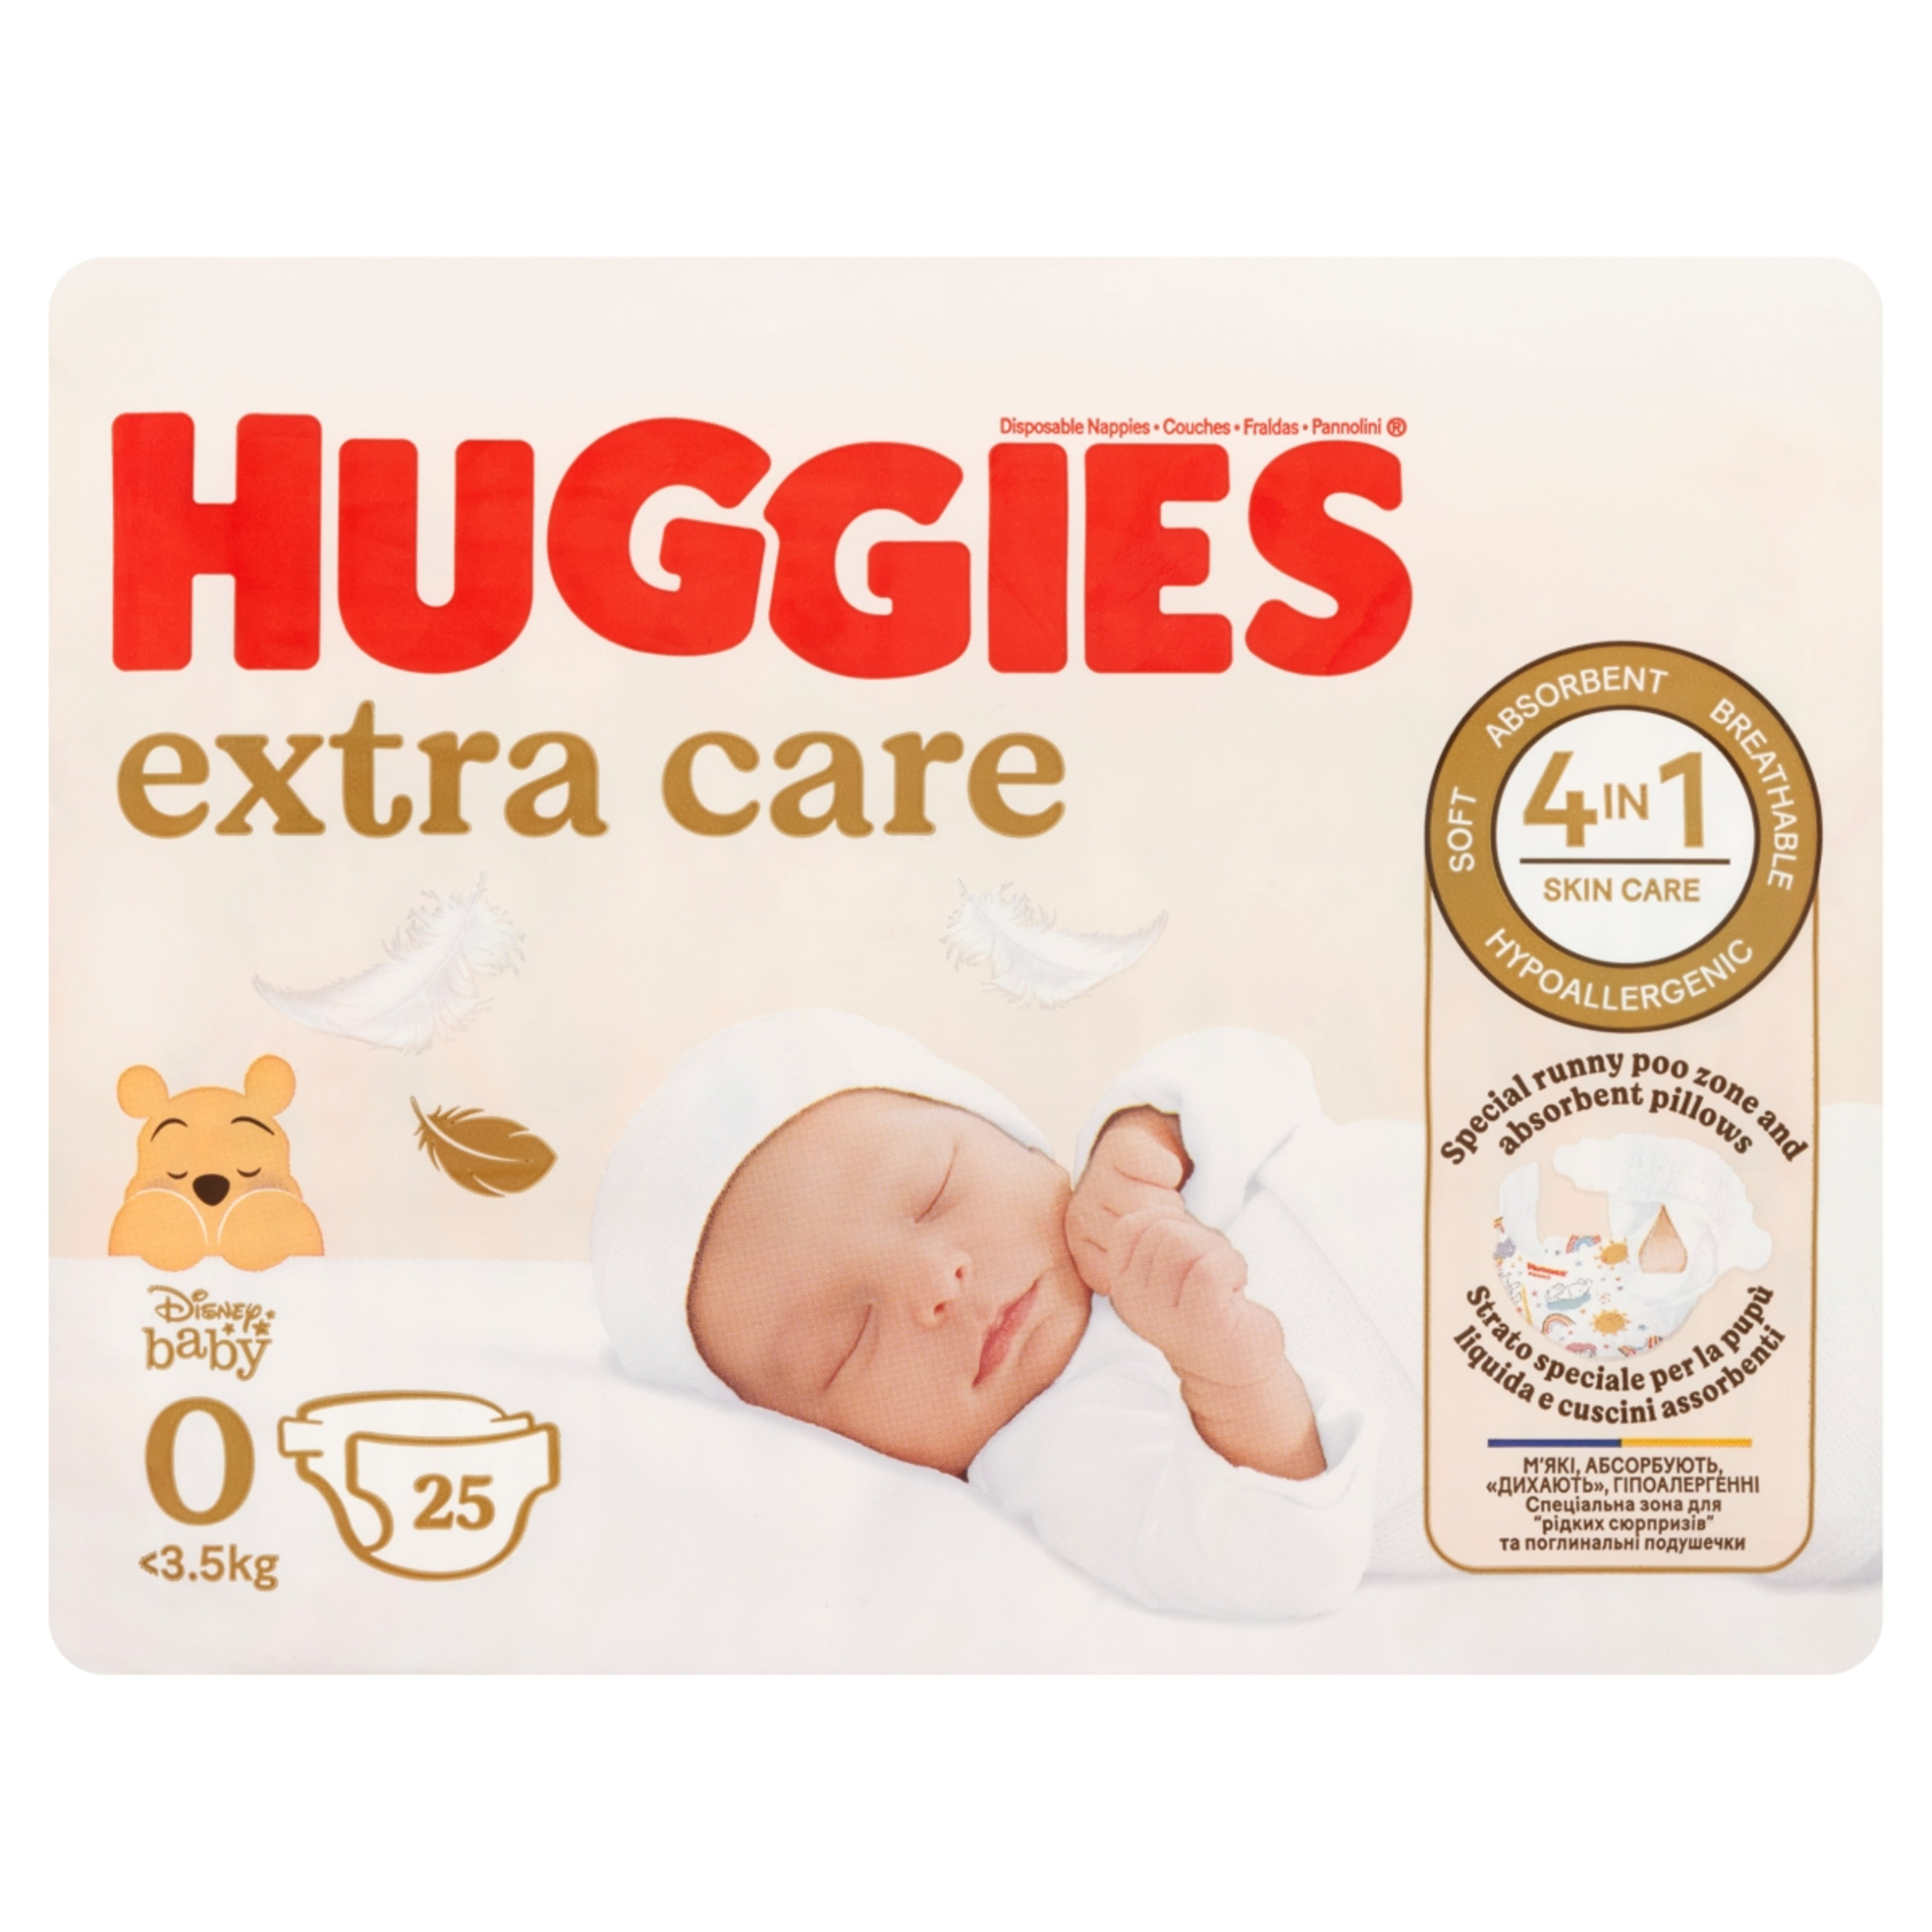 Huggies Extra Care nadrágpelenka 0- 4 kg - 25 db